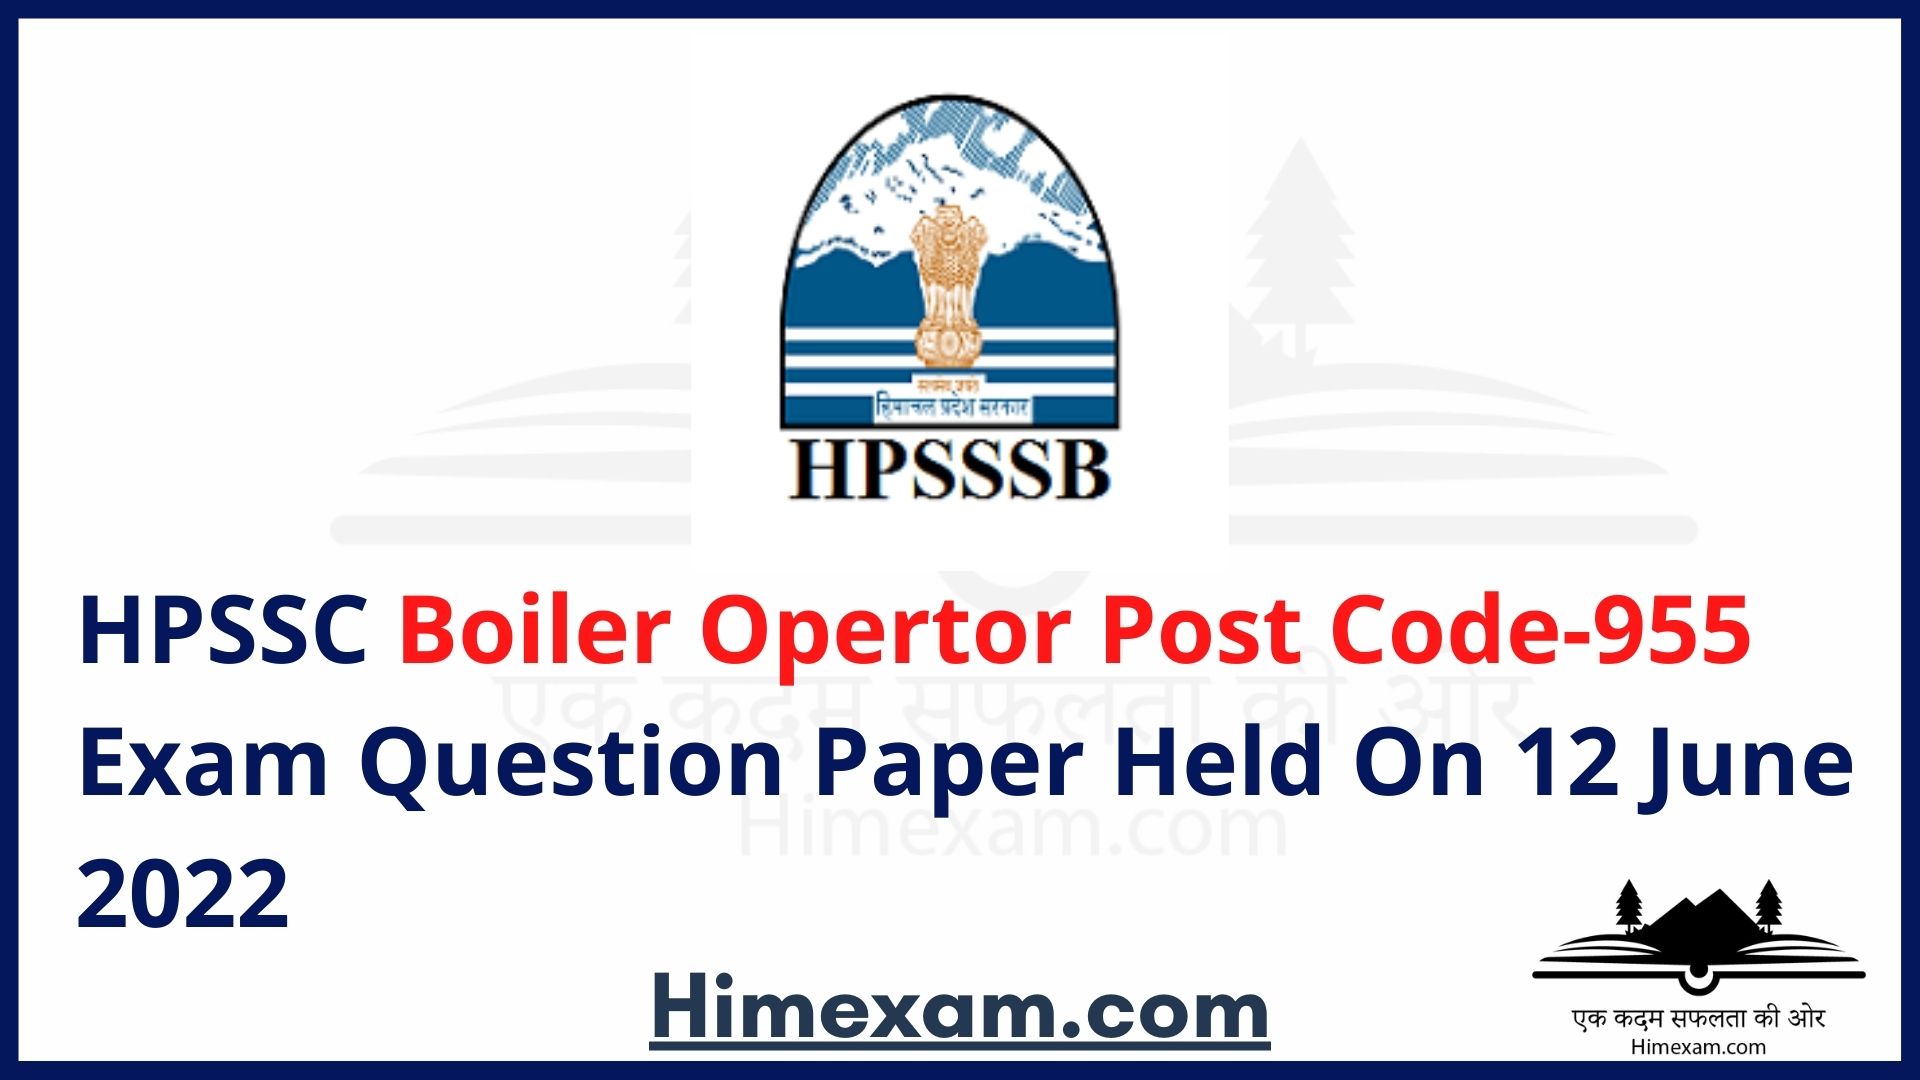 HPSSC Boiler Opertor Post Code-955 Exam Question Paper Held On 12 June 2022